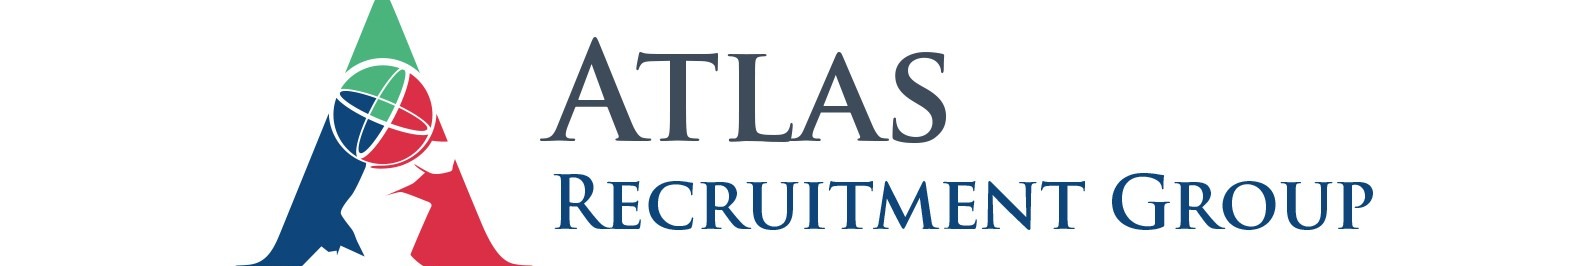 Atlas Recruitment Group background